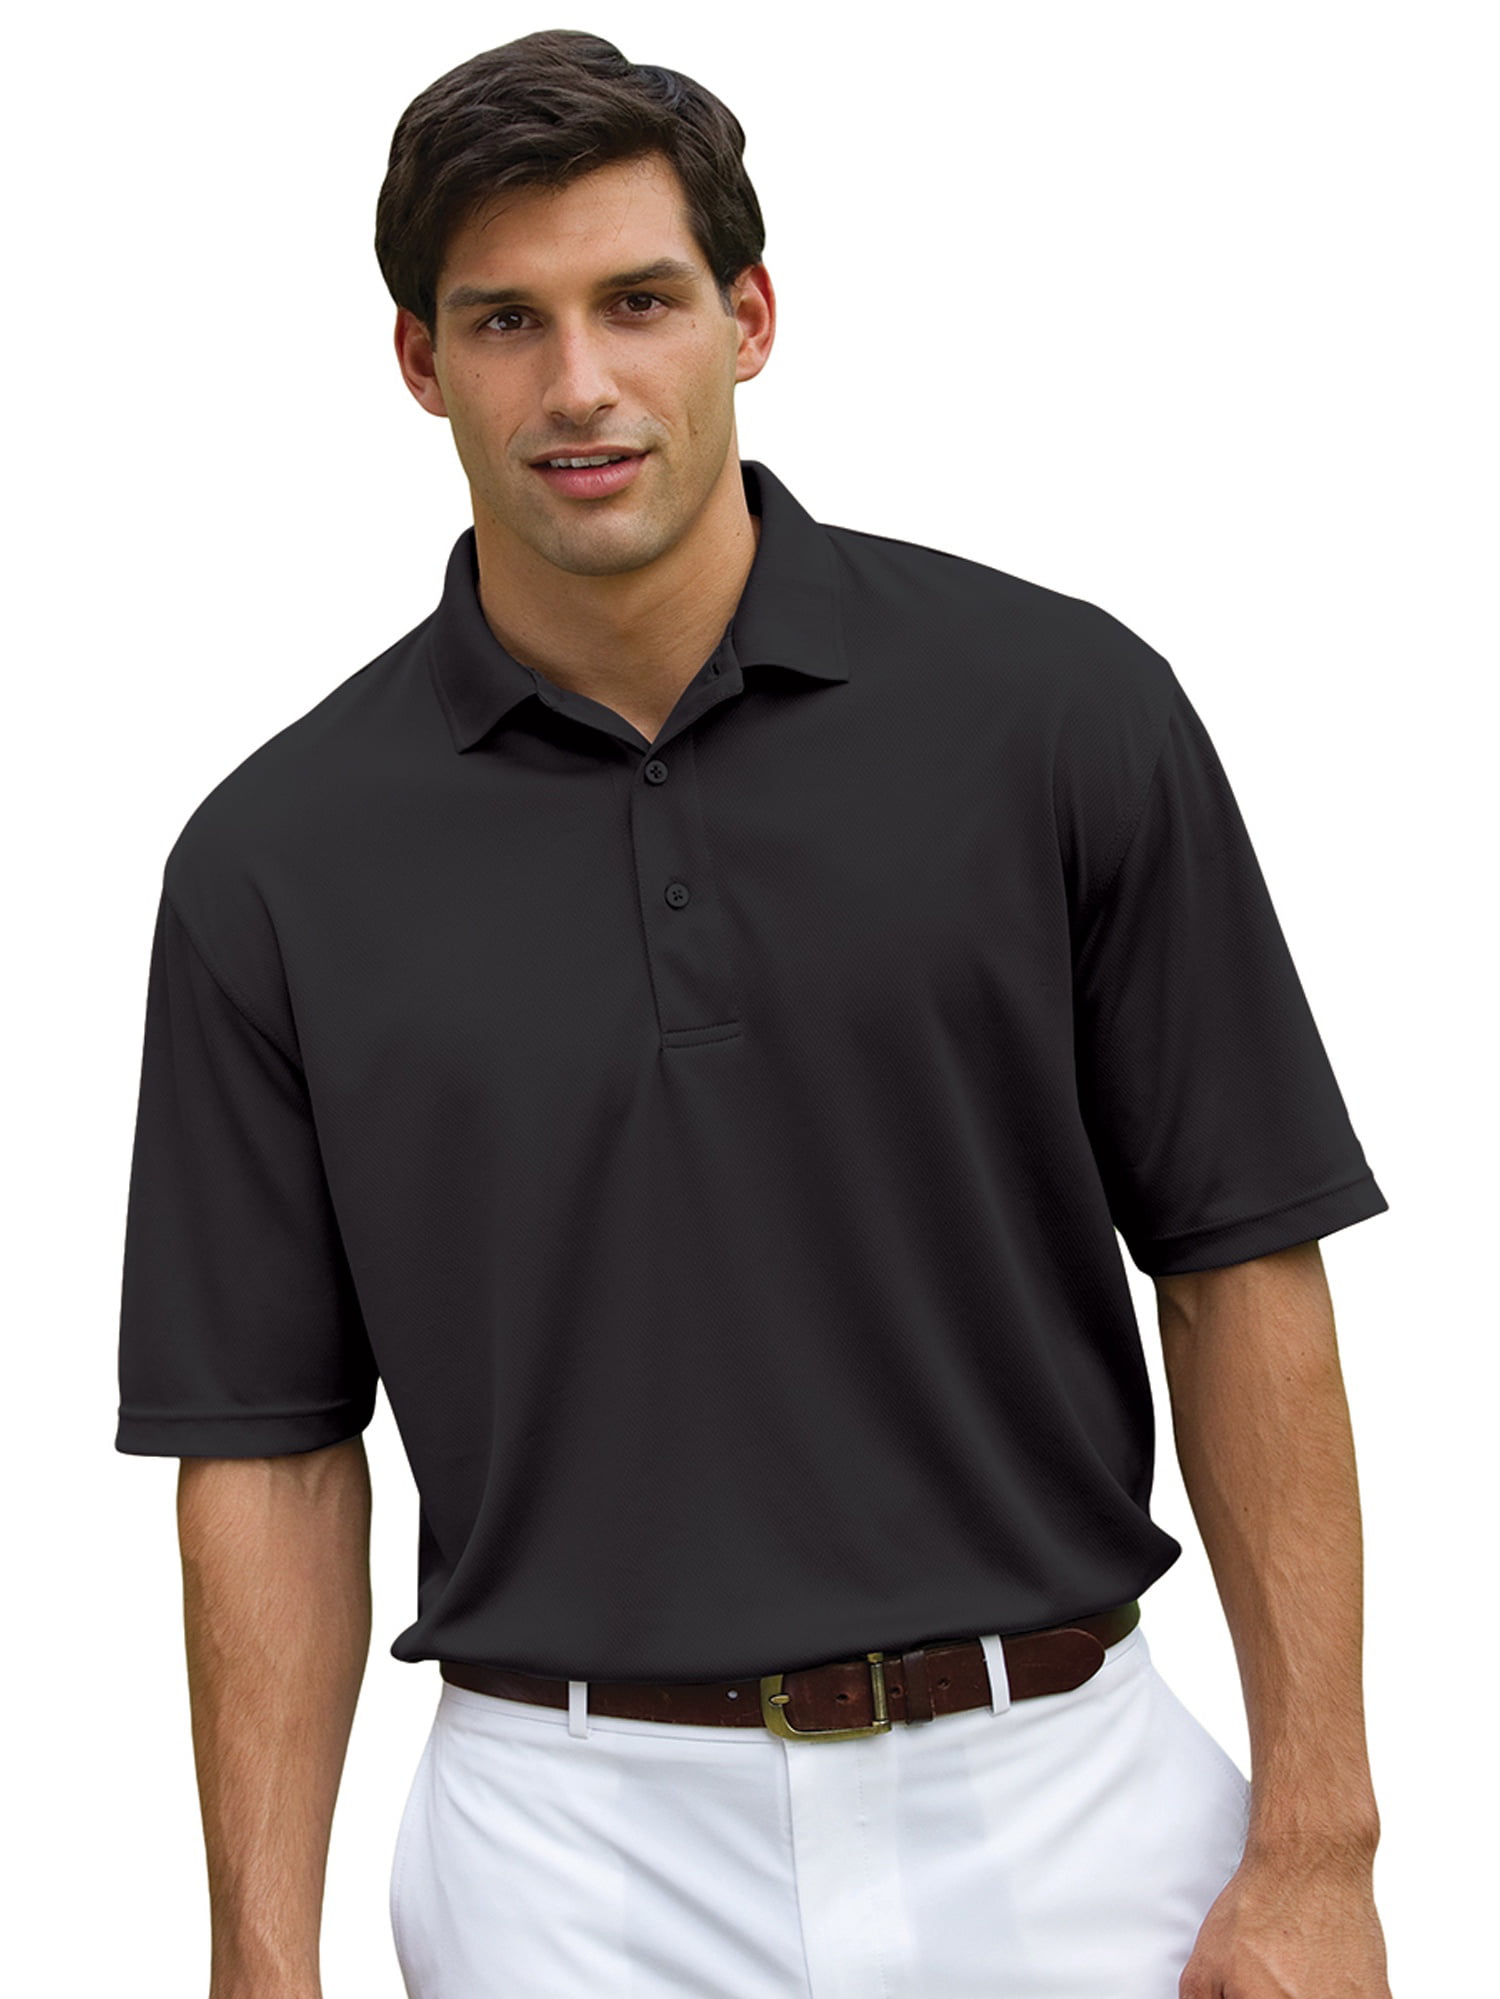 Men's Hemmed Sleeves Performance Polo Shirt - Walmart.com